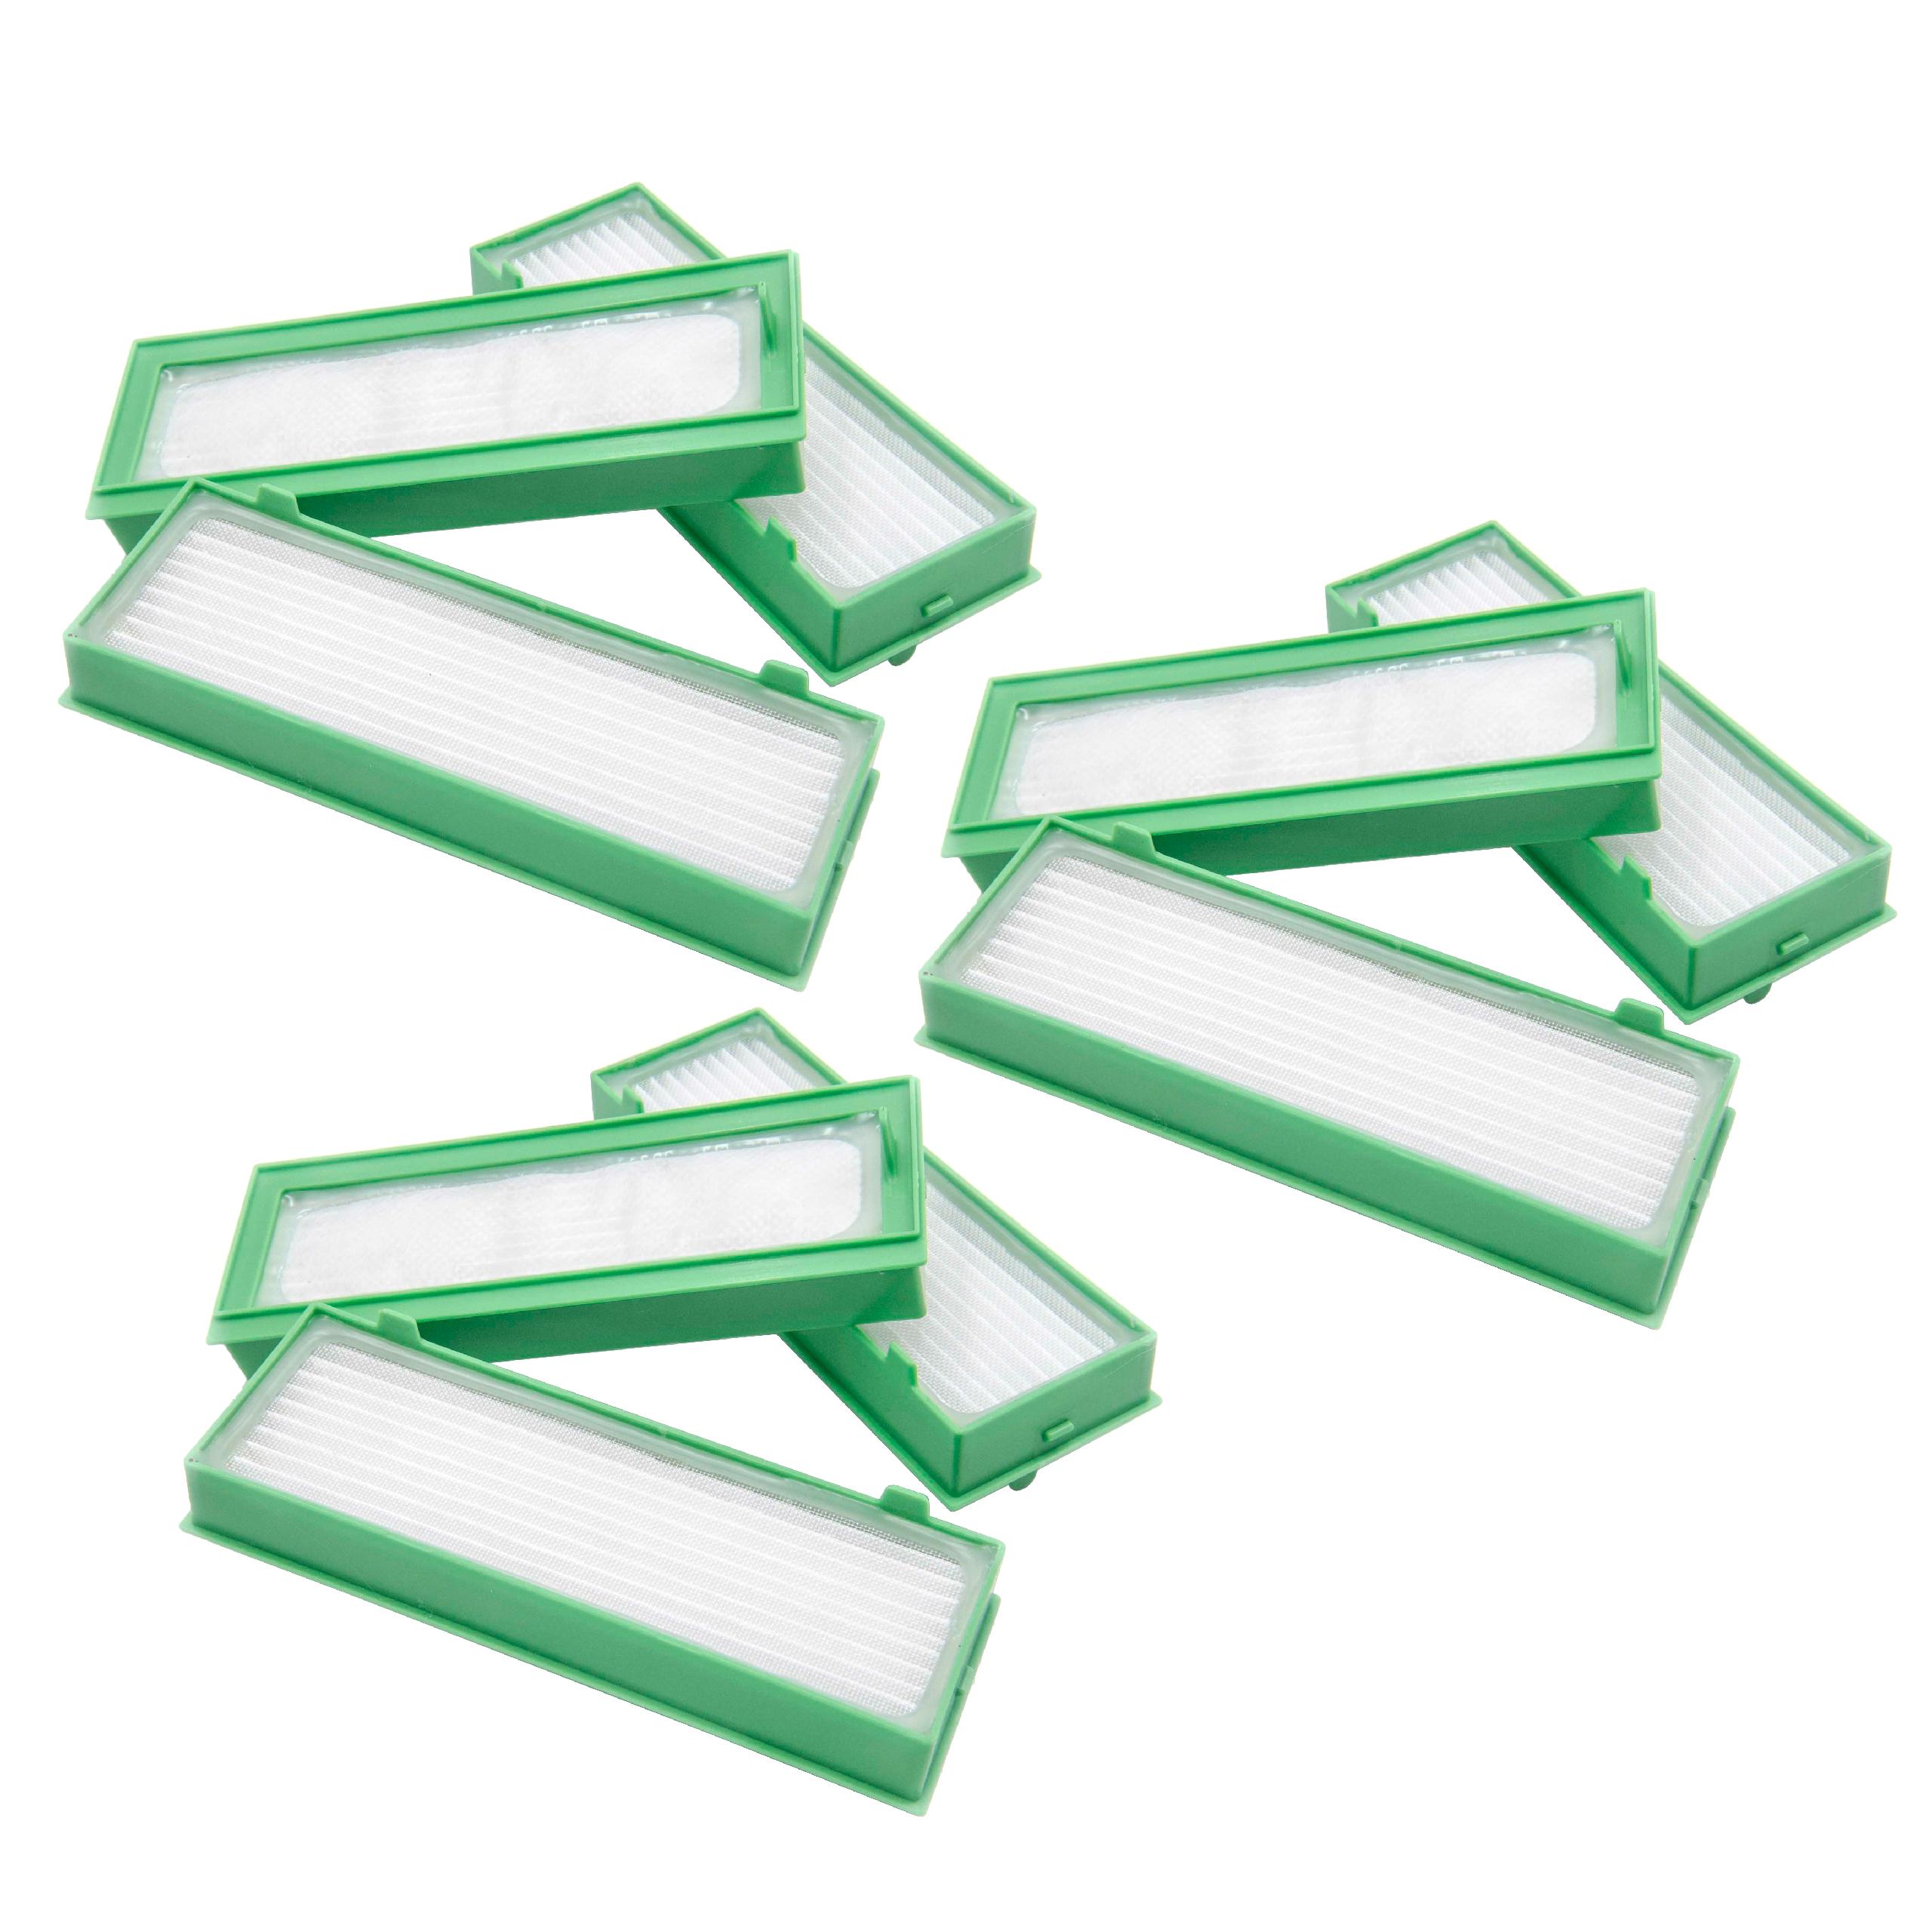 9x Filtro per aspirapolvere Vorwerk folletto - filtro HEPA, bianco / verde